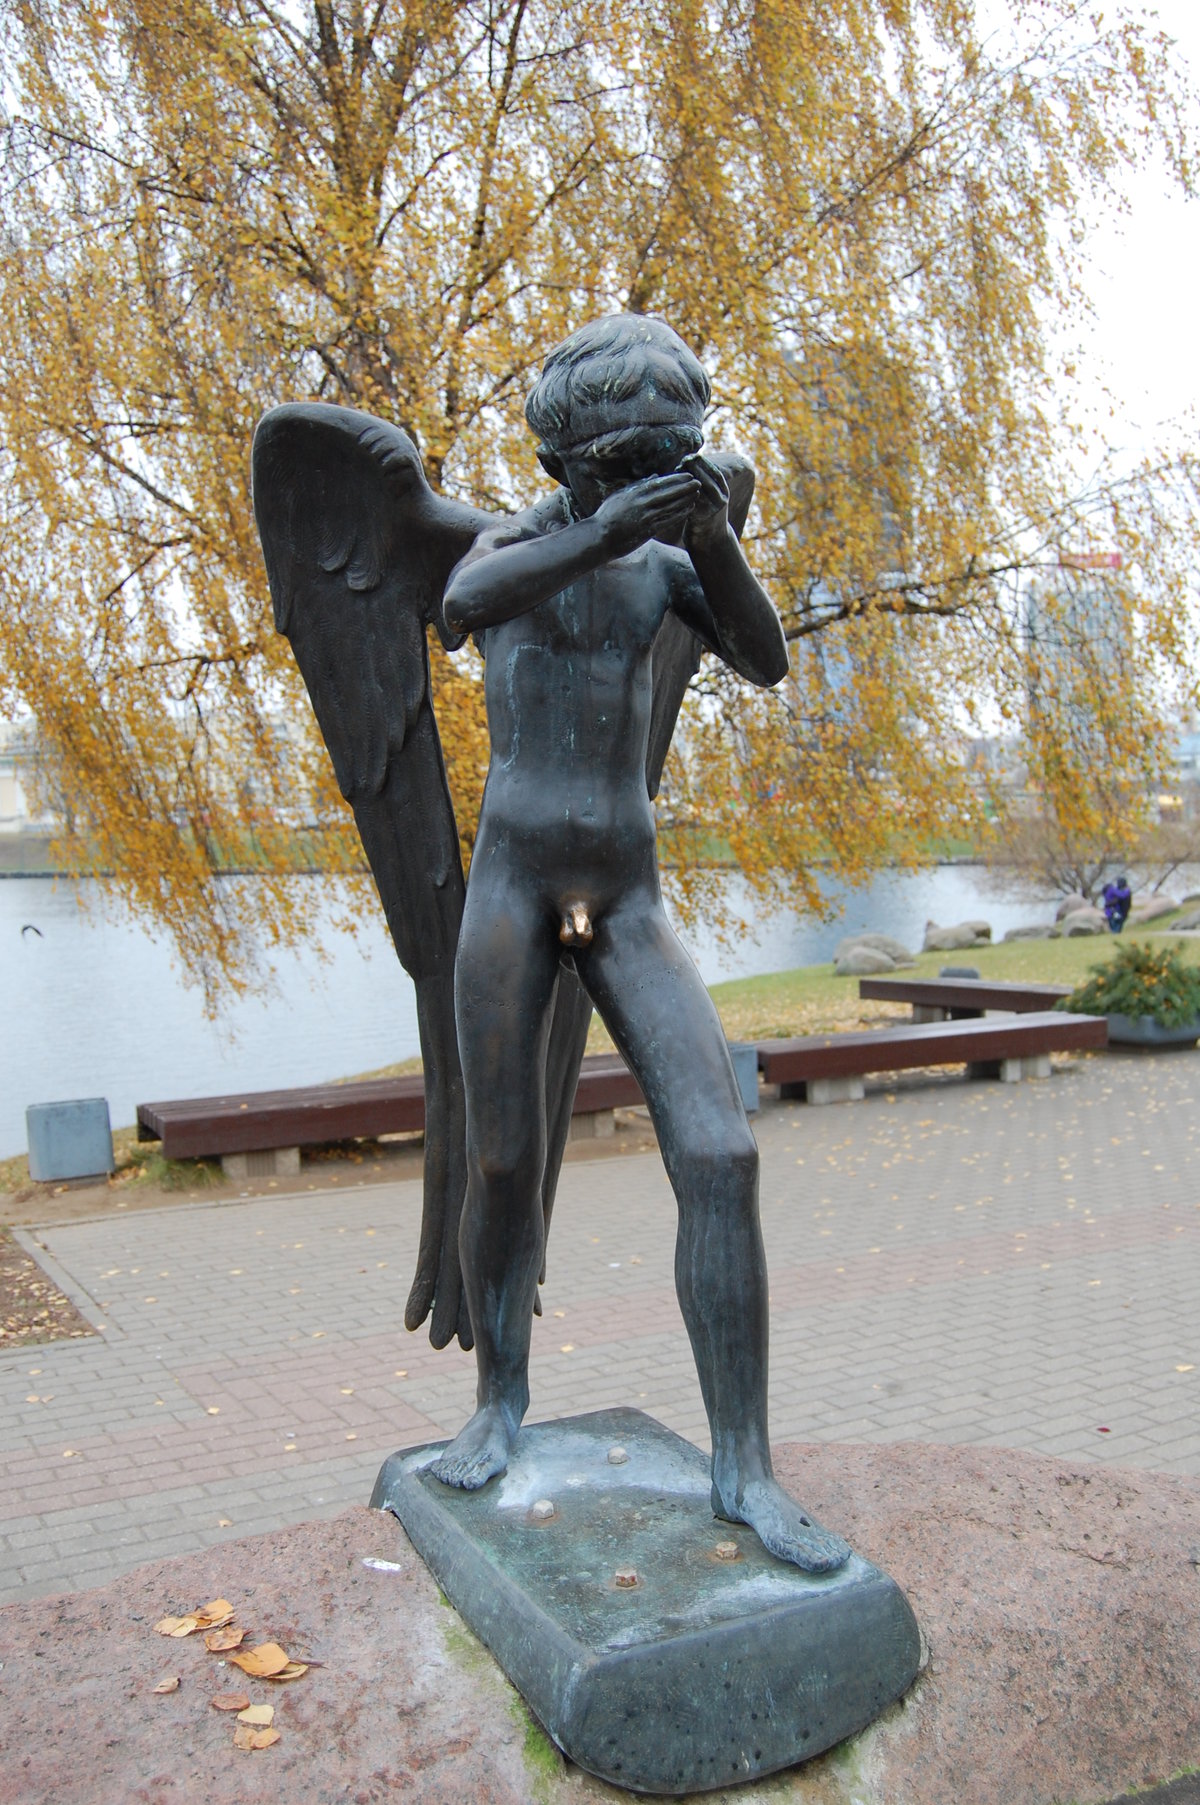 Плачущий ангел
#беларуссия #минск #ноябрь #осень